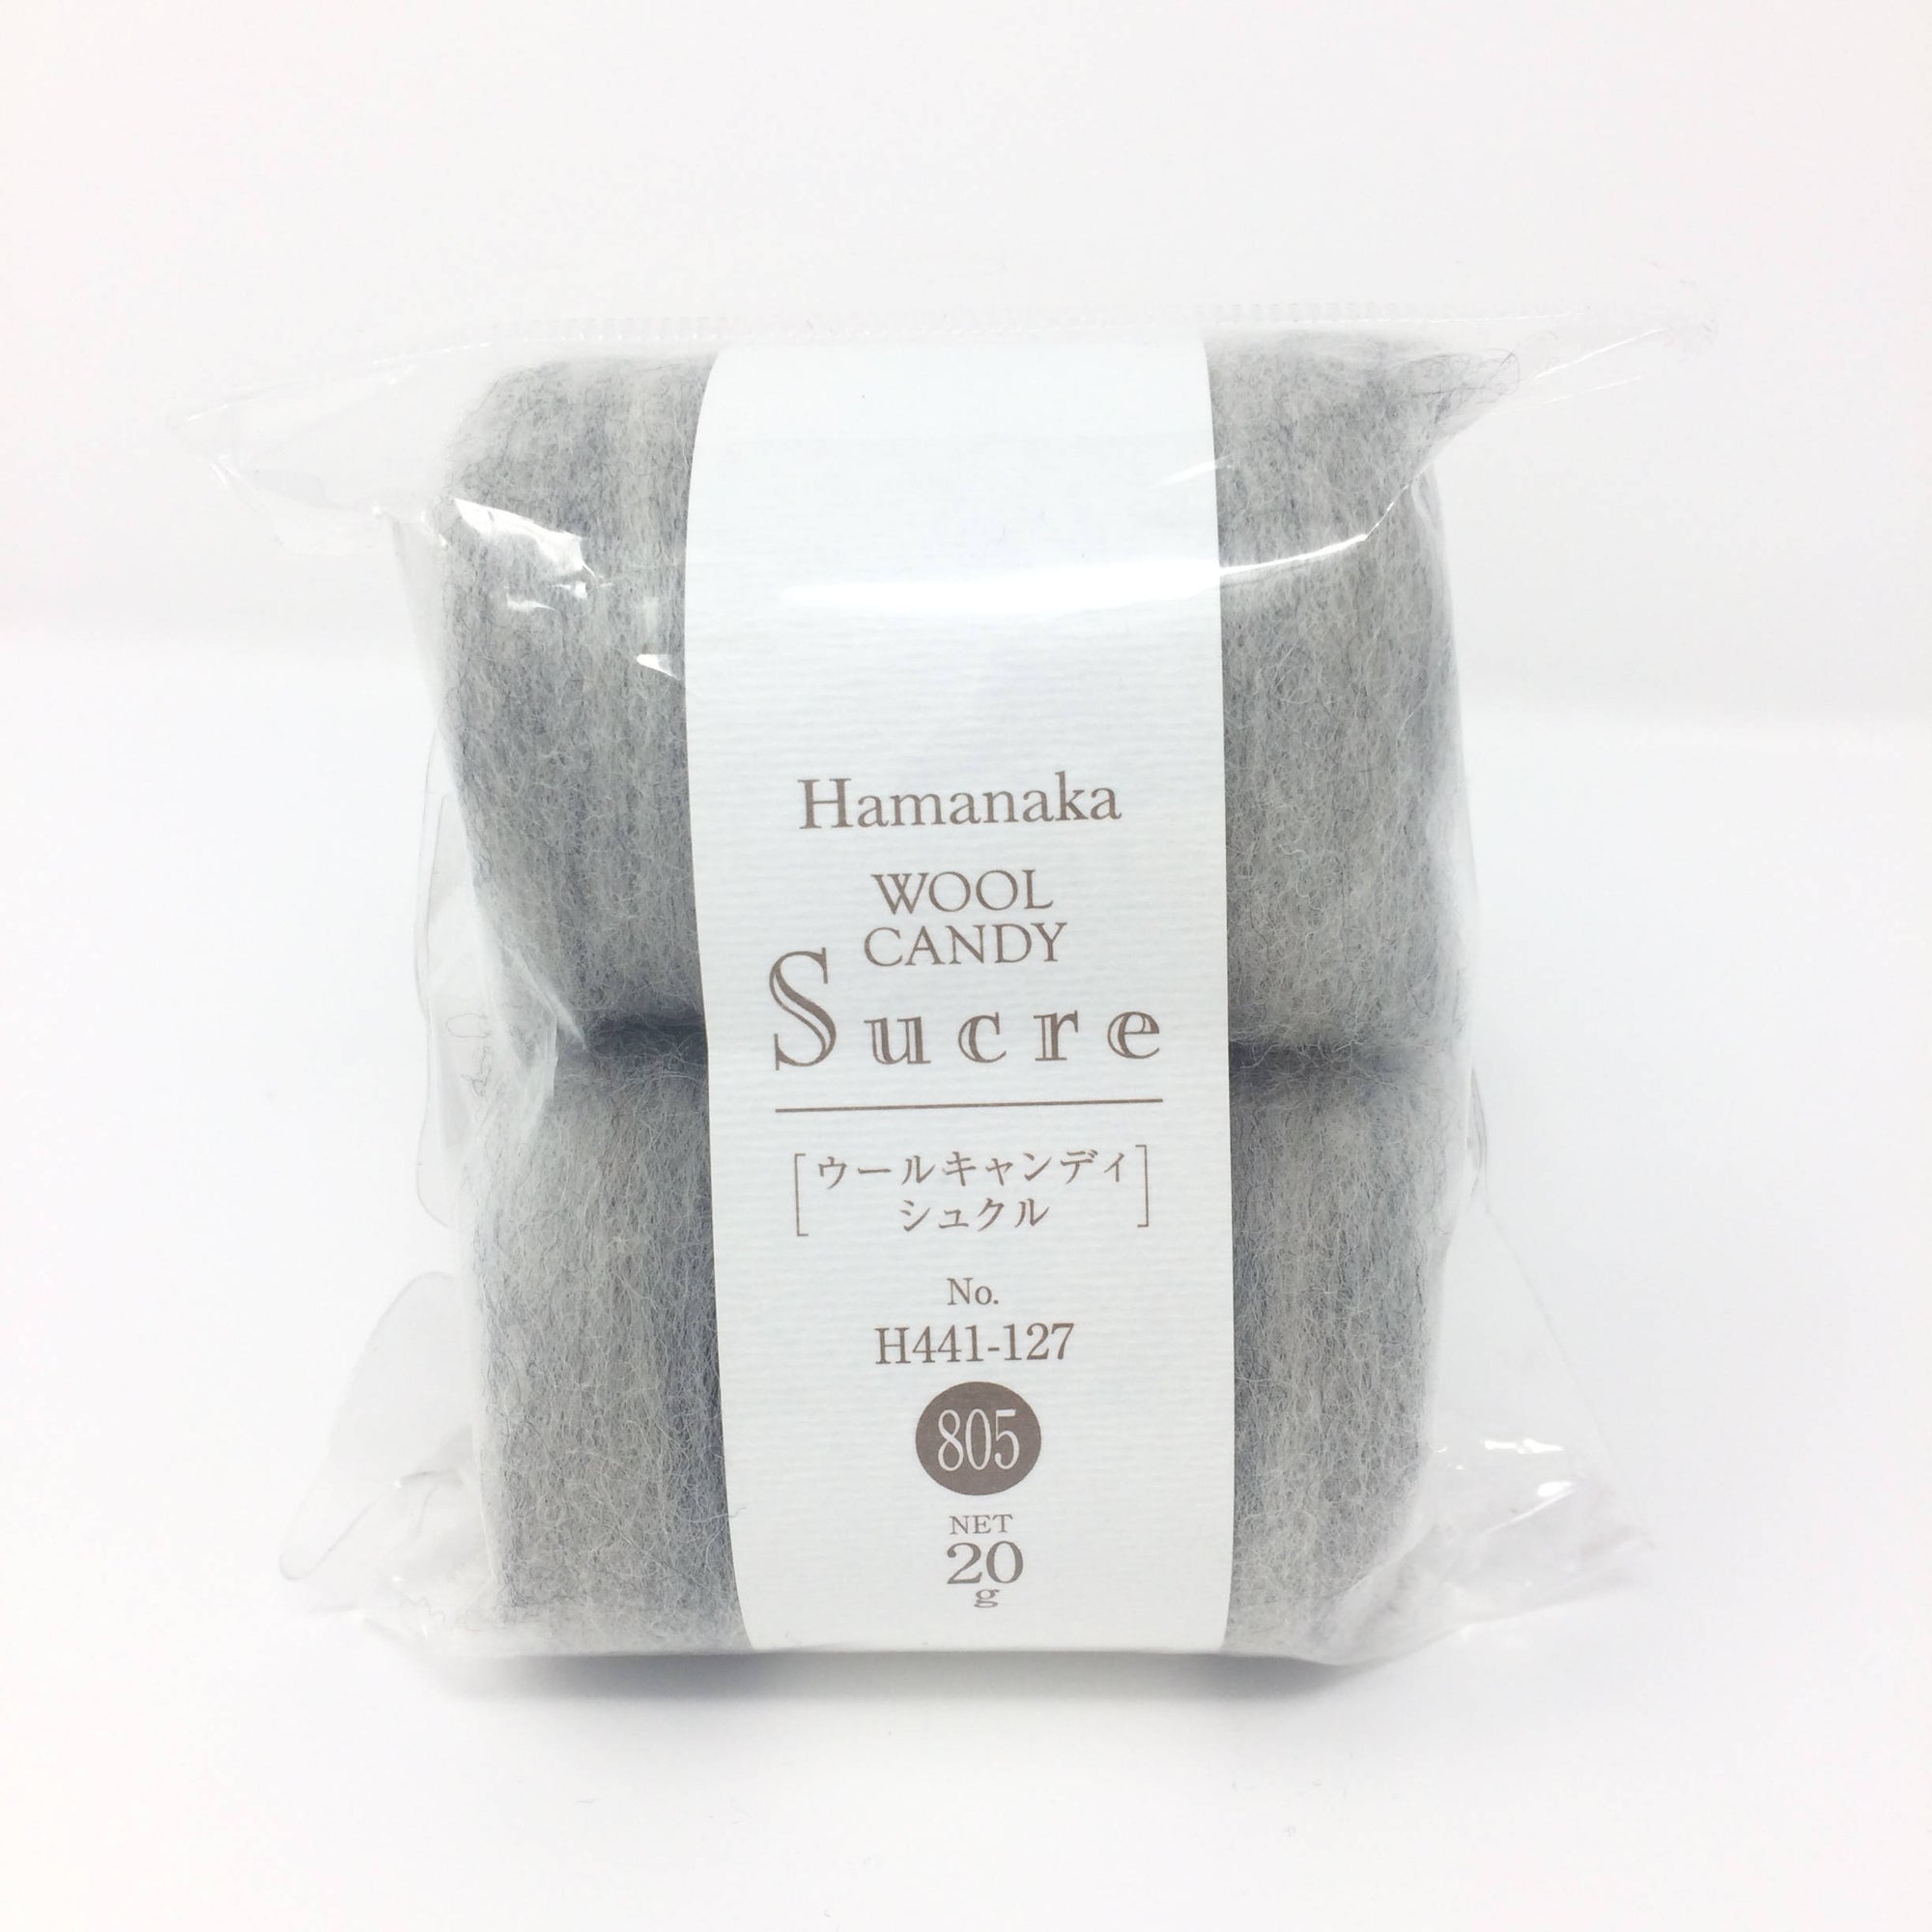 Hamanaka Wool Candy Sucre - Natural Light Grey 20g